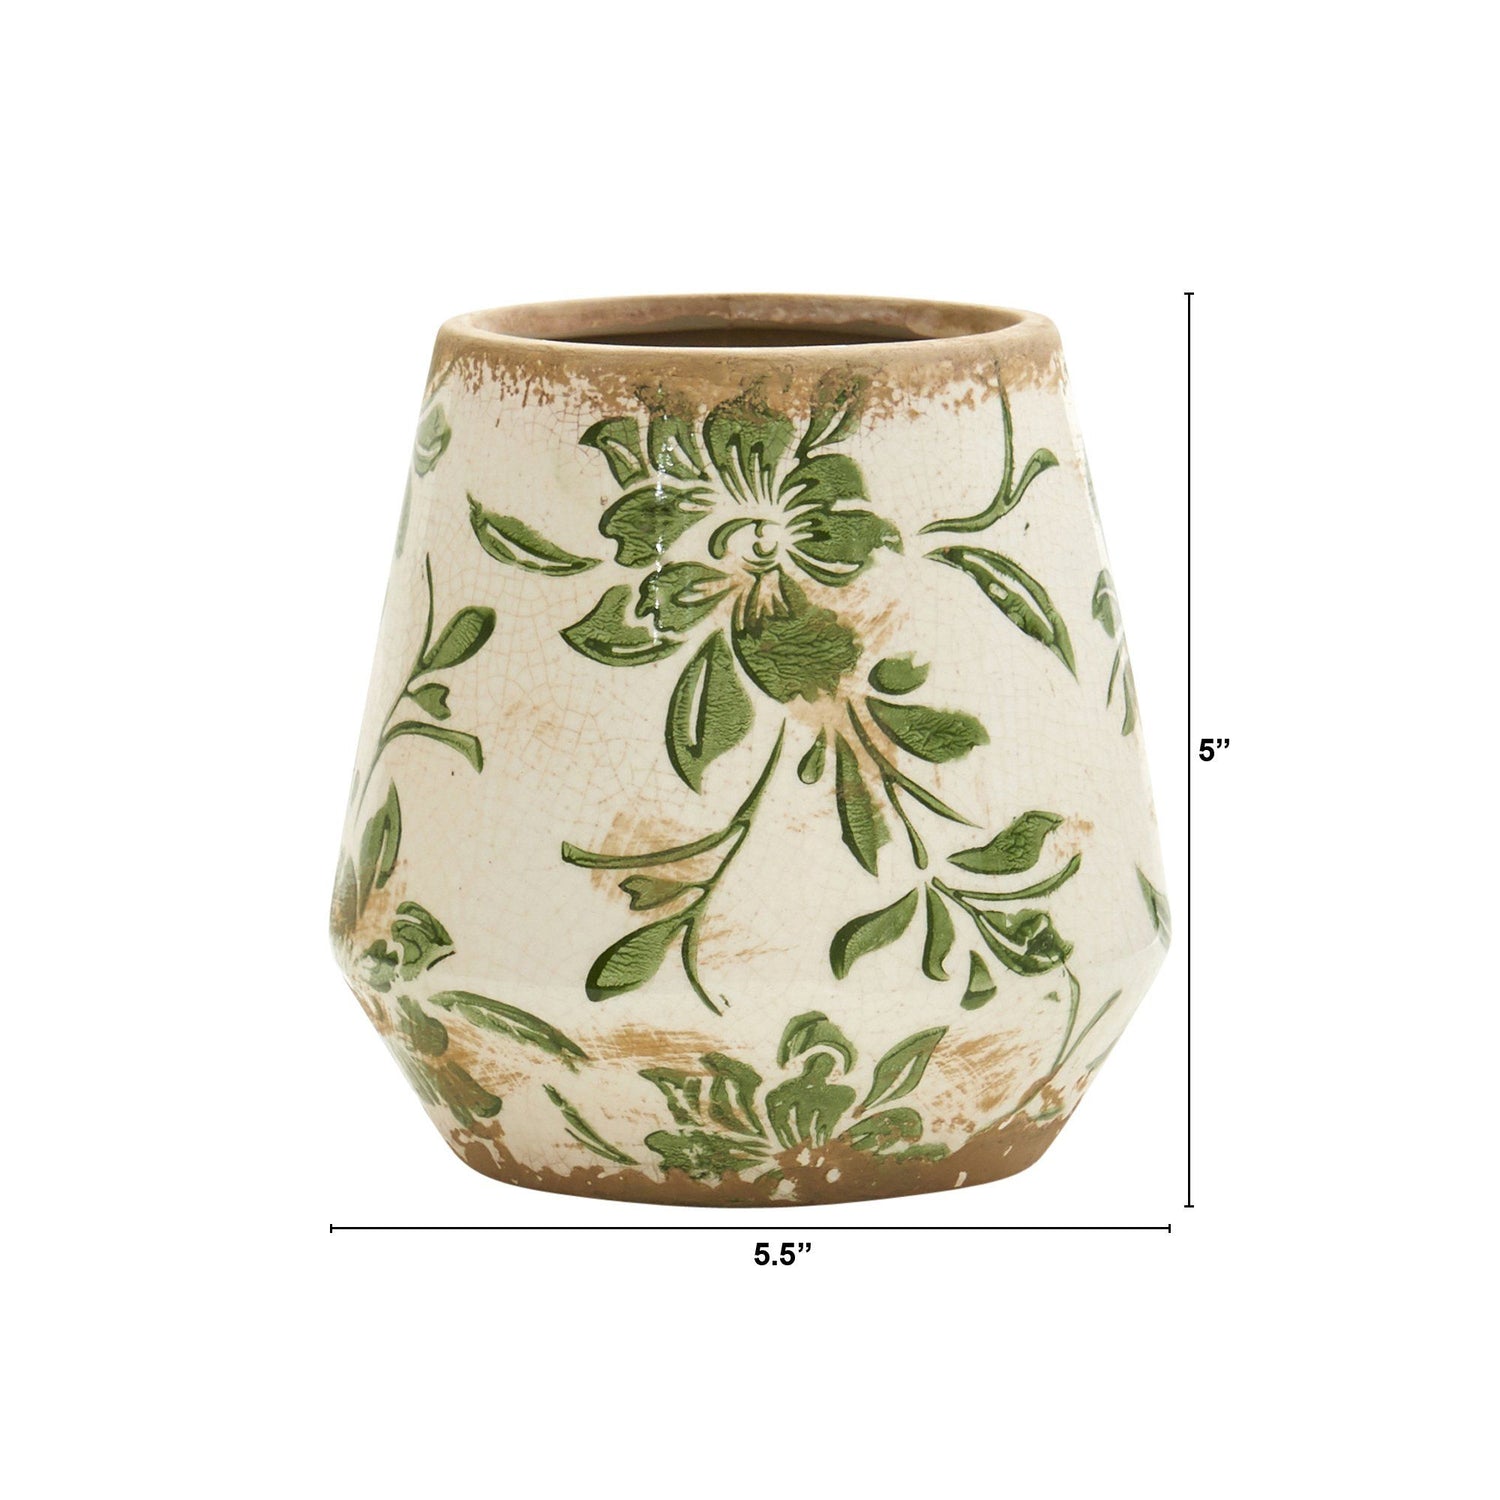 5.5” Tuscan Ceramic Green Scroll Planter